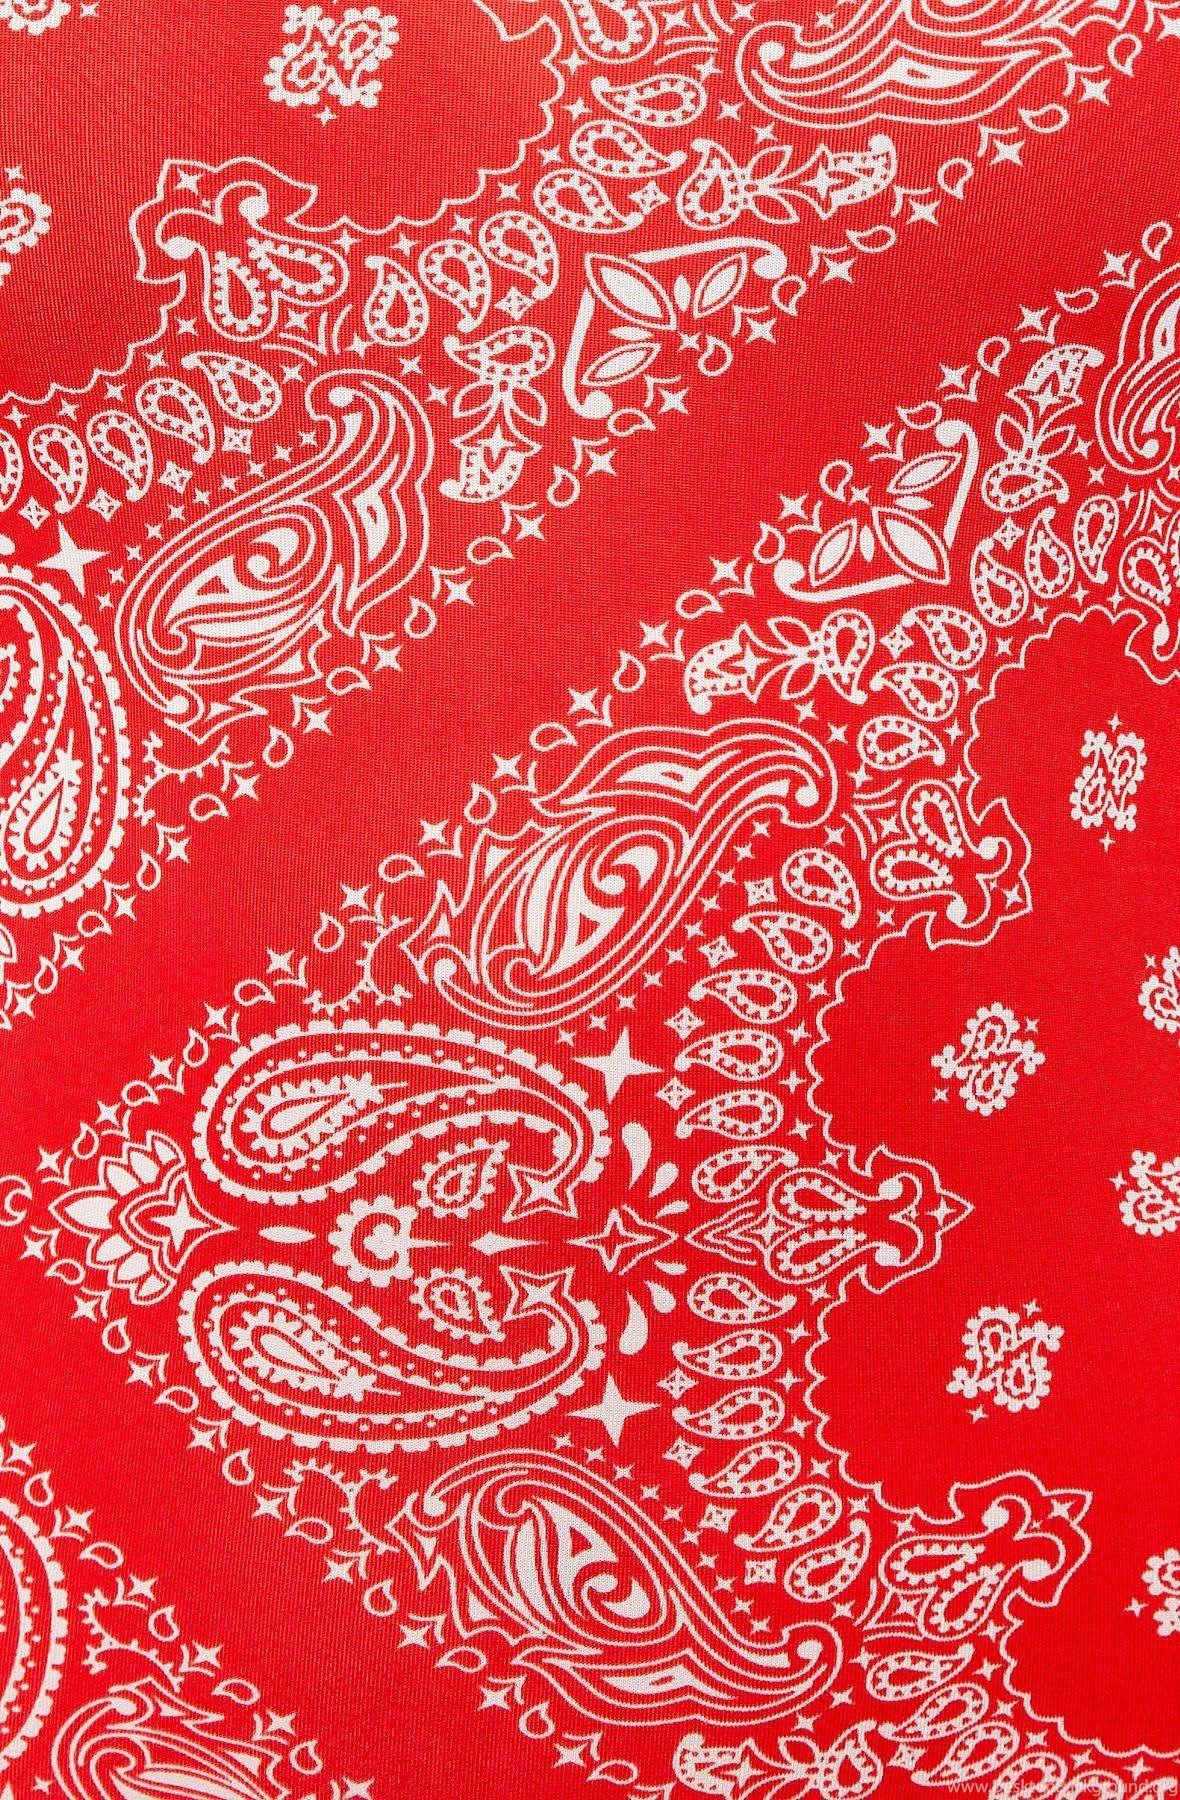 77+] Red Bandana Wallpaper